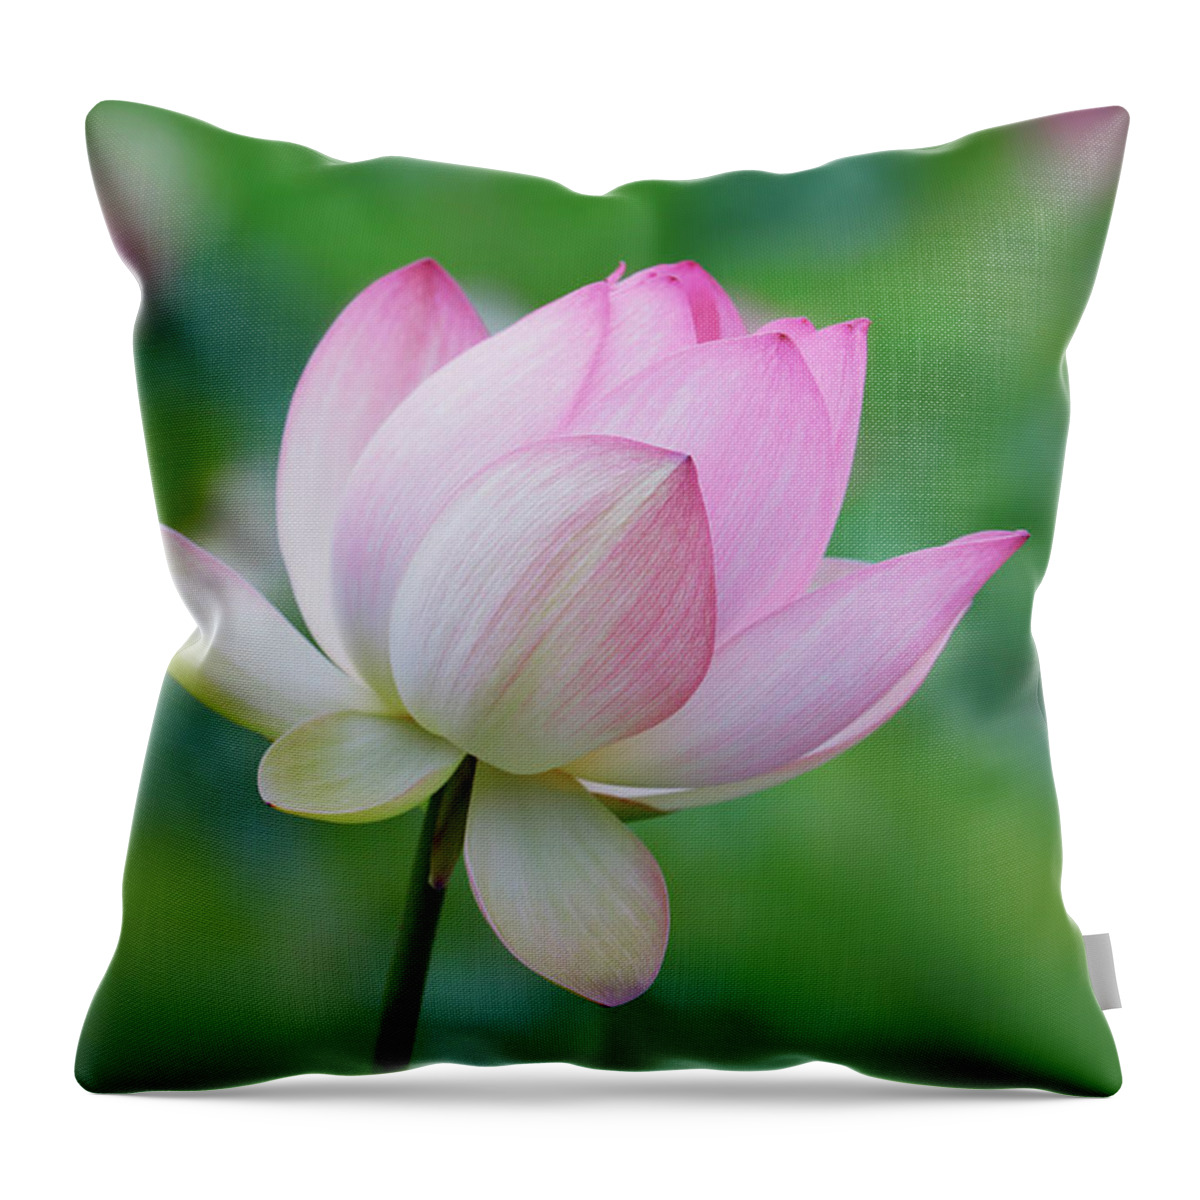 Lotus Flower Throw Pillow featuring the photograph Lotus Bloom by Ram Vasudev